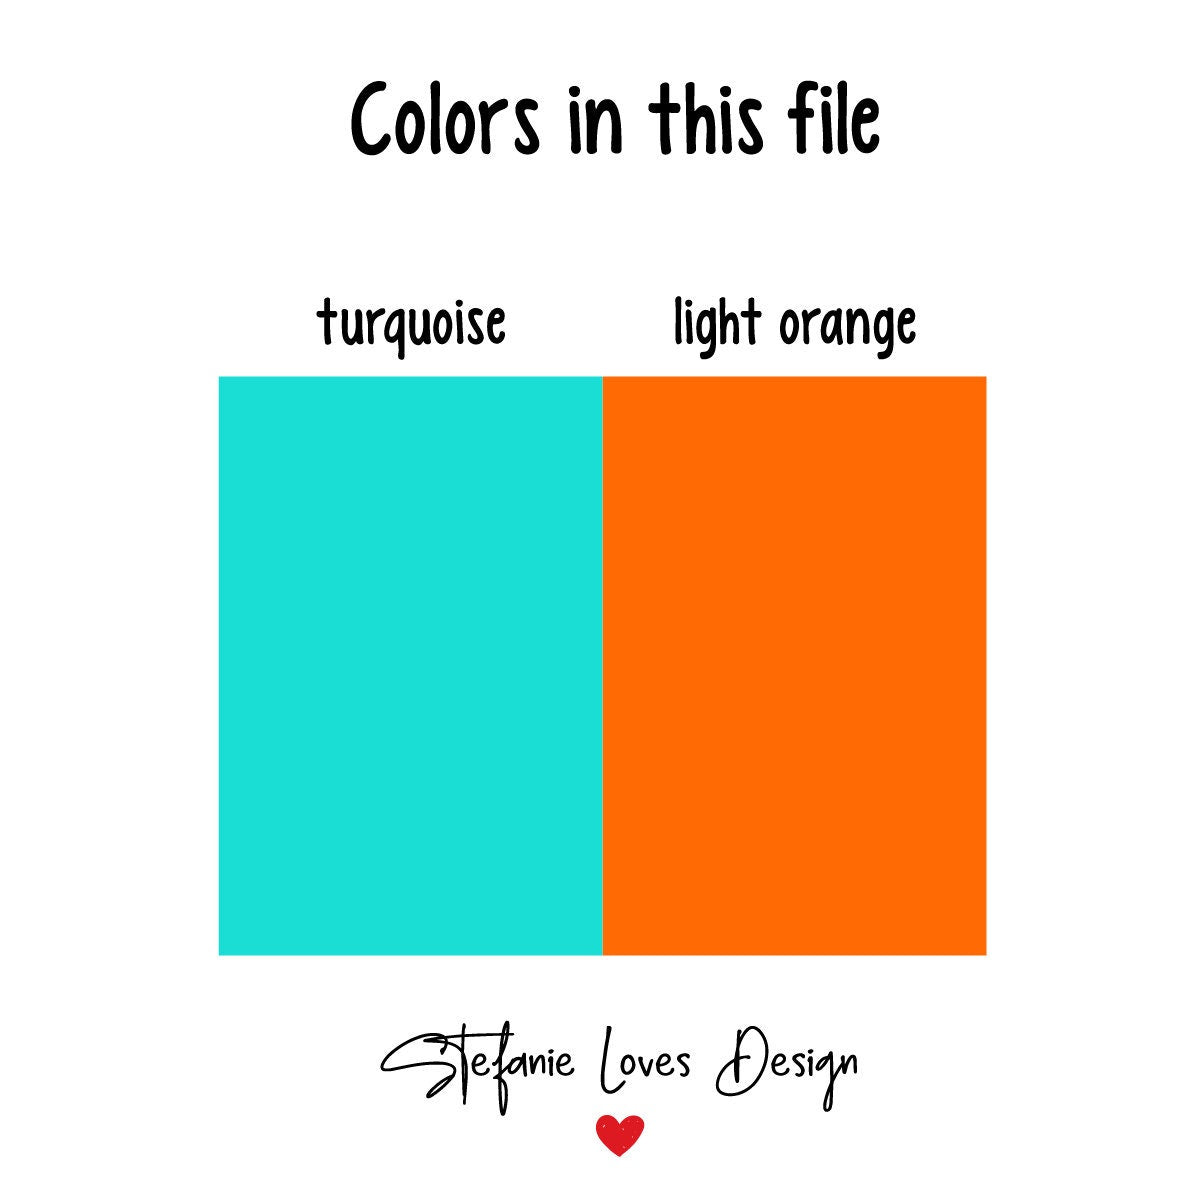 Amen png, Amen Leopard png, Christian saying, Digital Design, Turquoise and Light Orange Amen